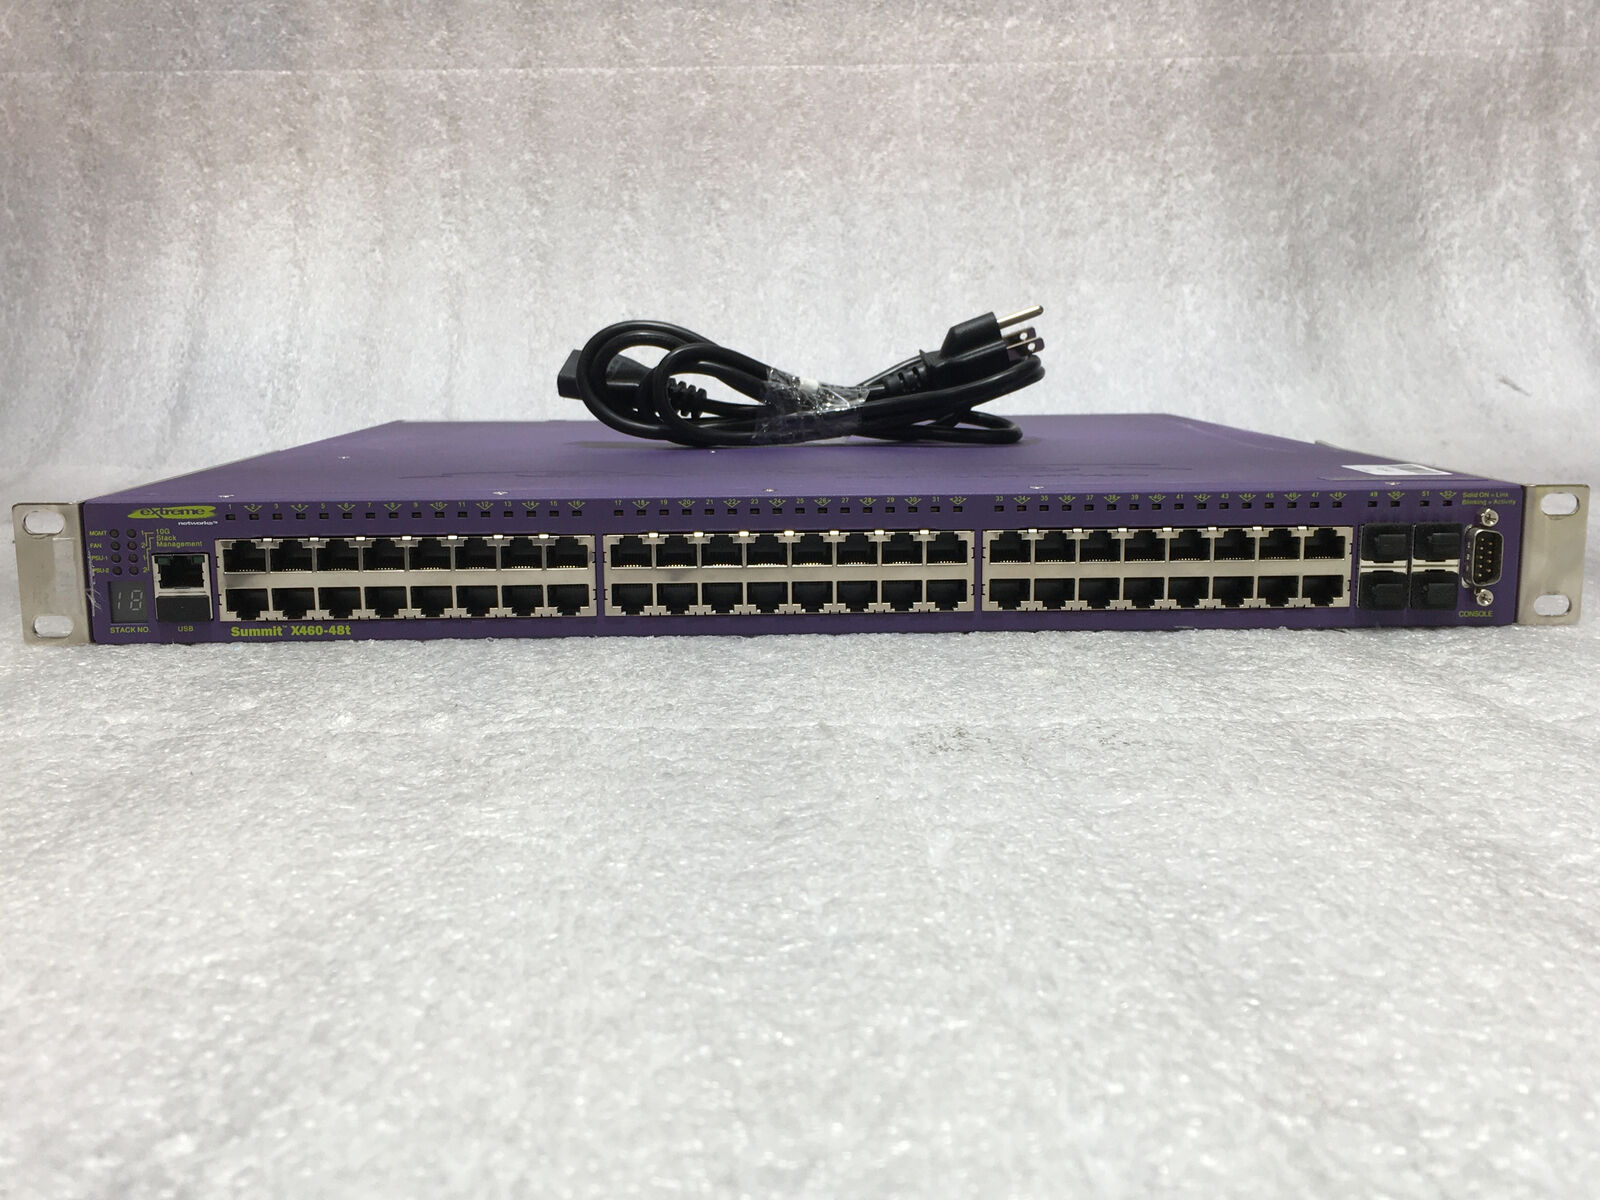 Extreme Networks Summit X460-48t 16402 48 Port Gigabit Ethernet Switch, Reset